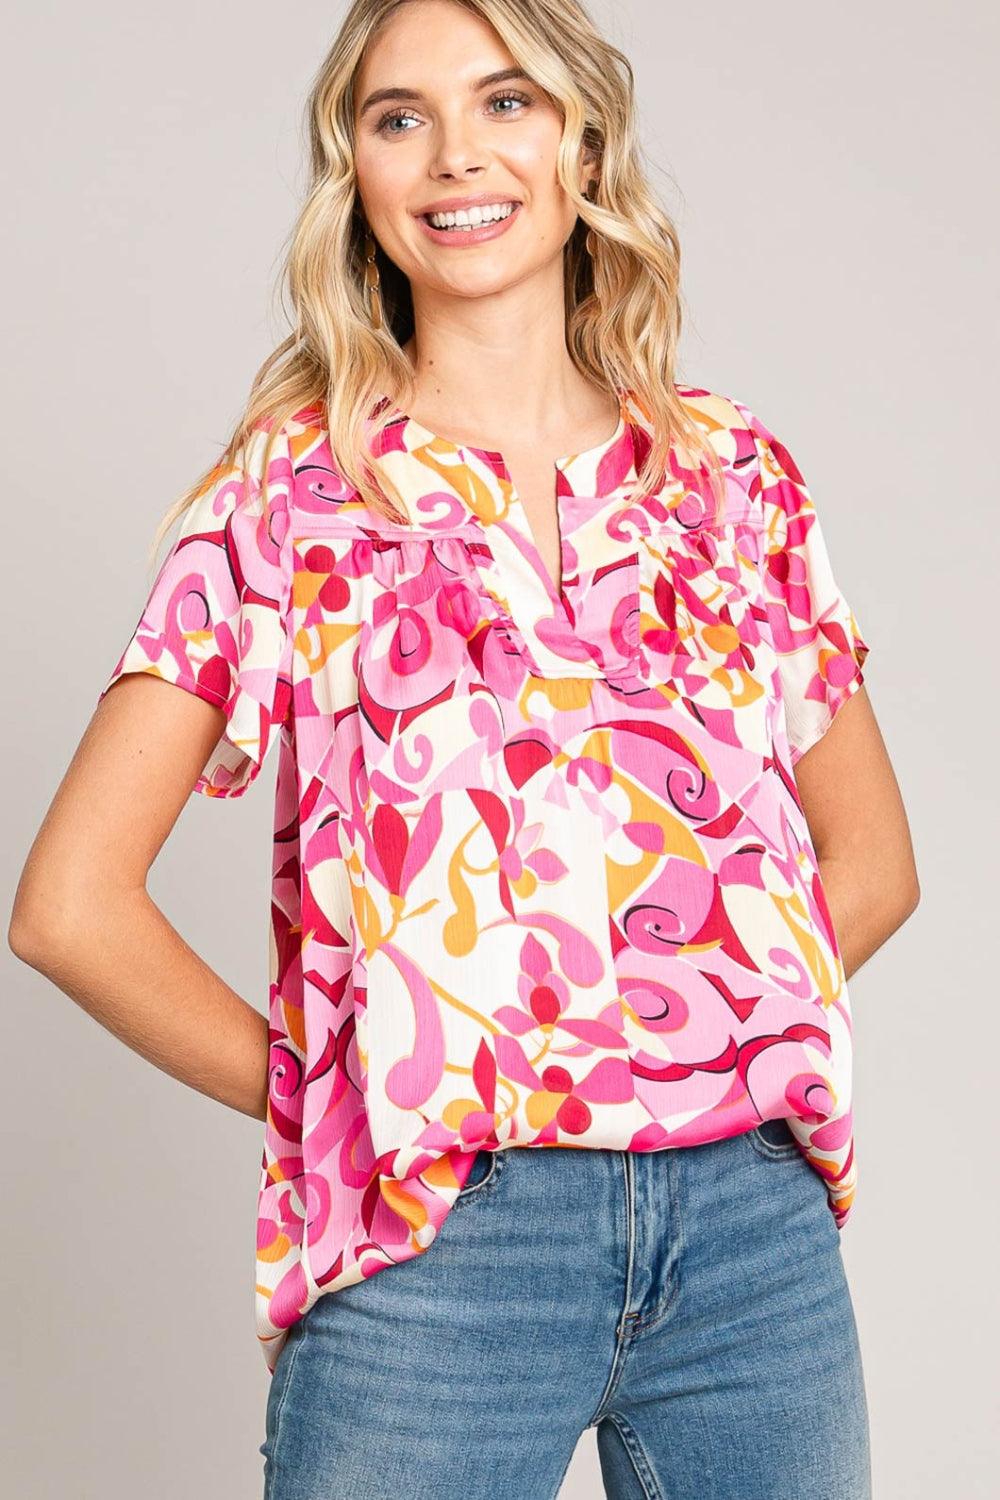 Cotton Bleu Abstract Print Short Sleeve Top Pink Shirts & Tops